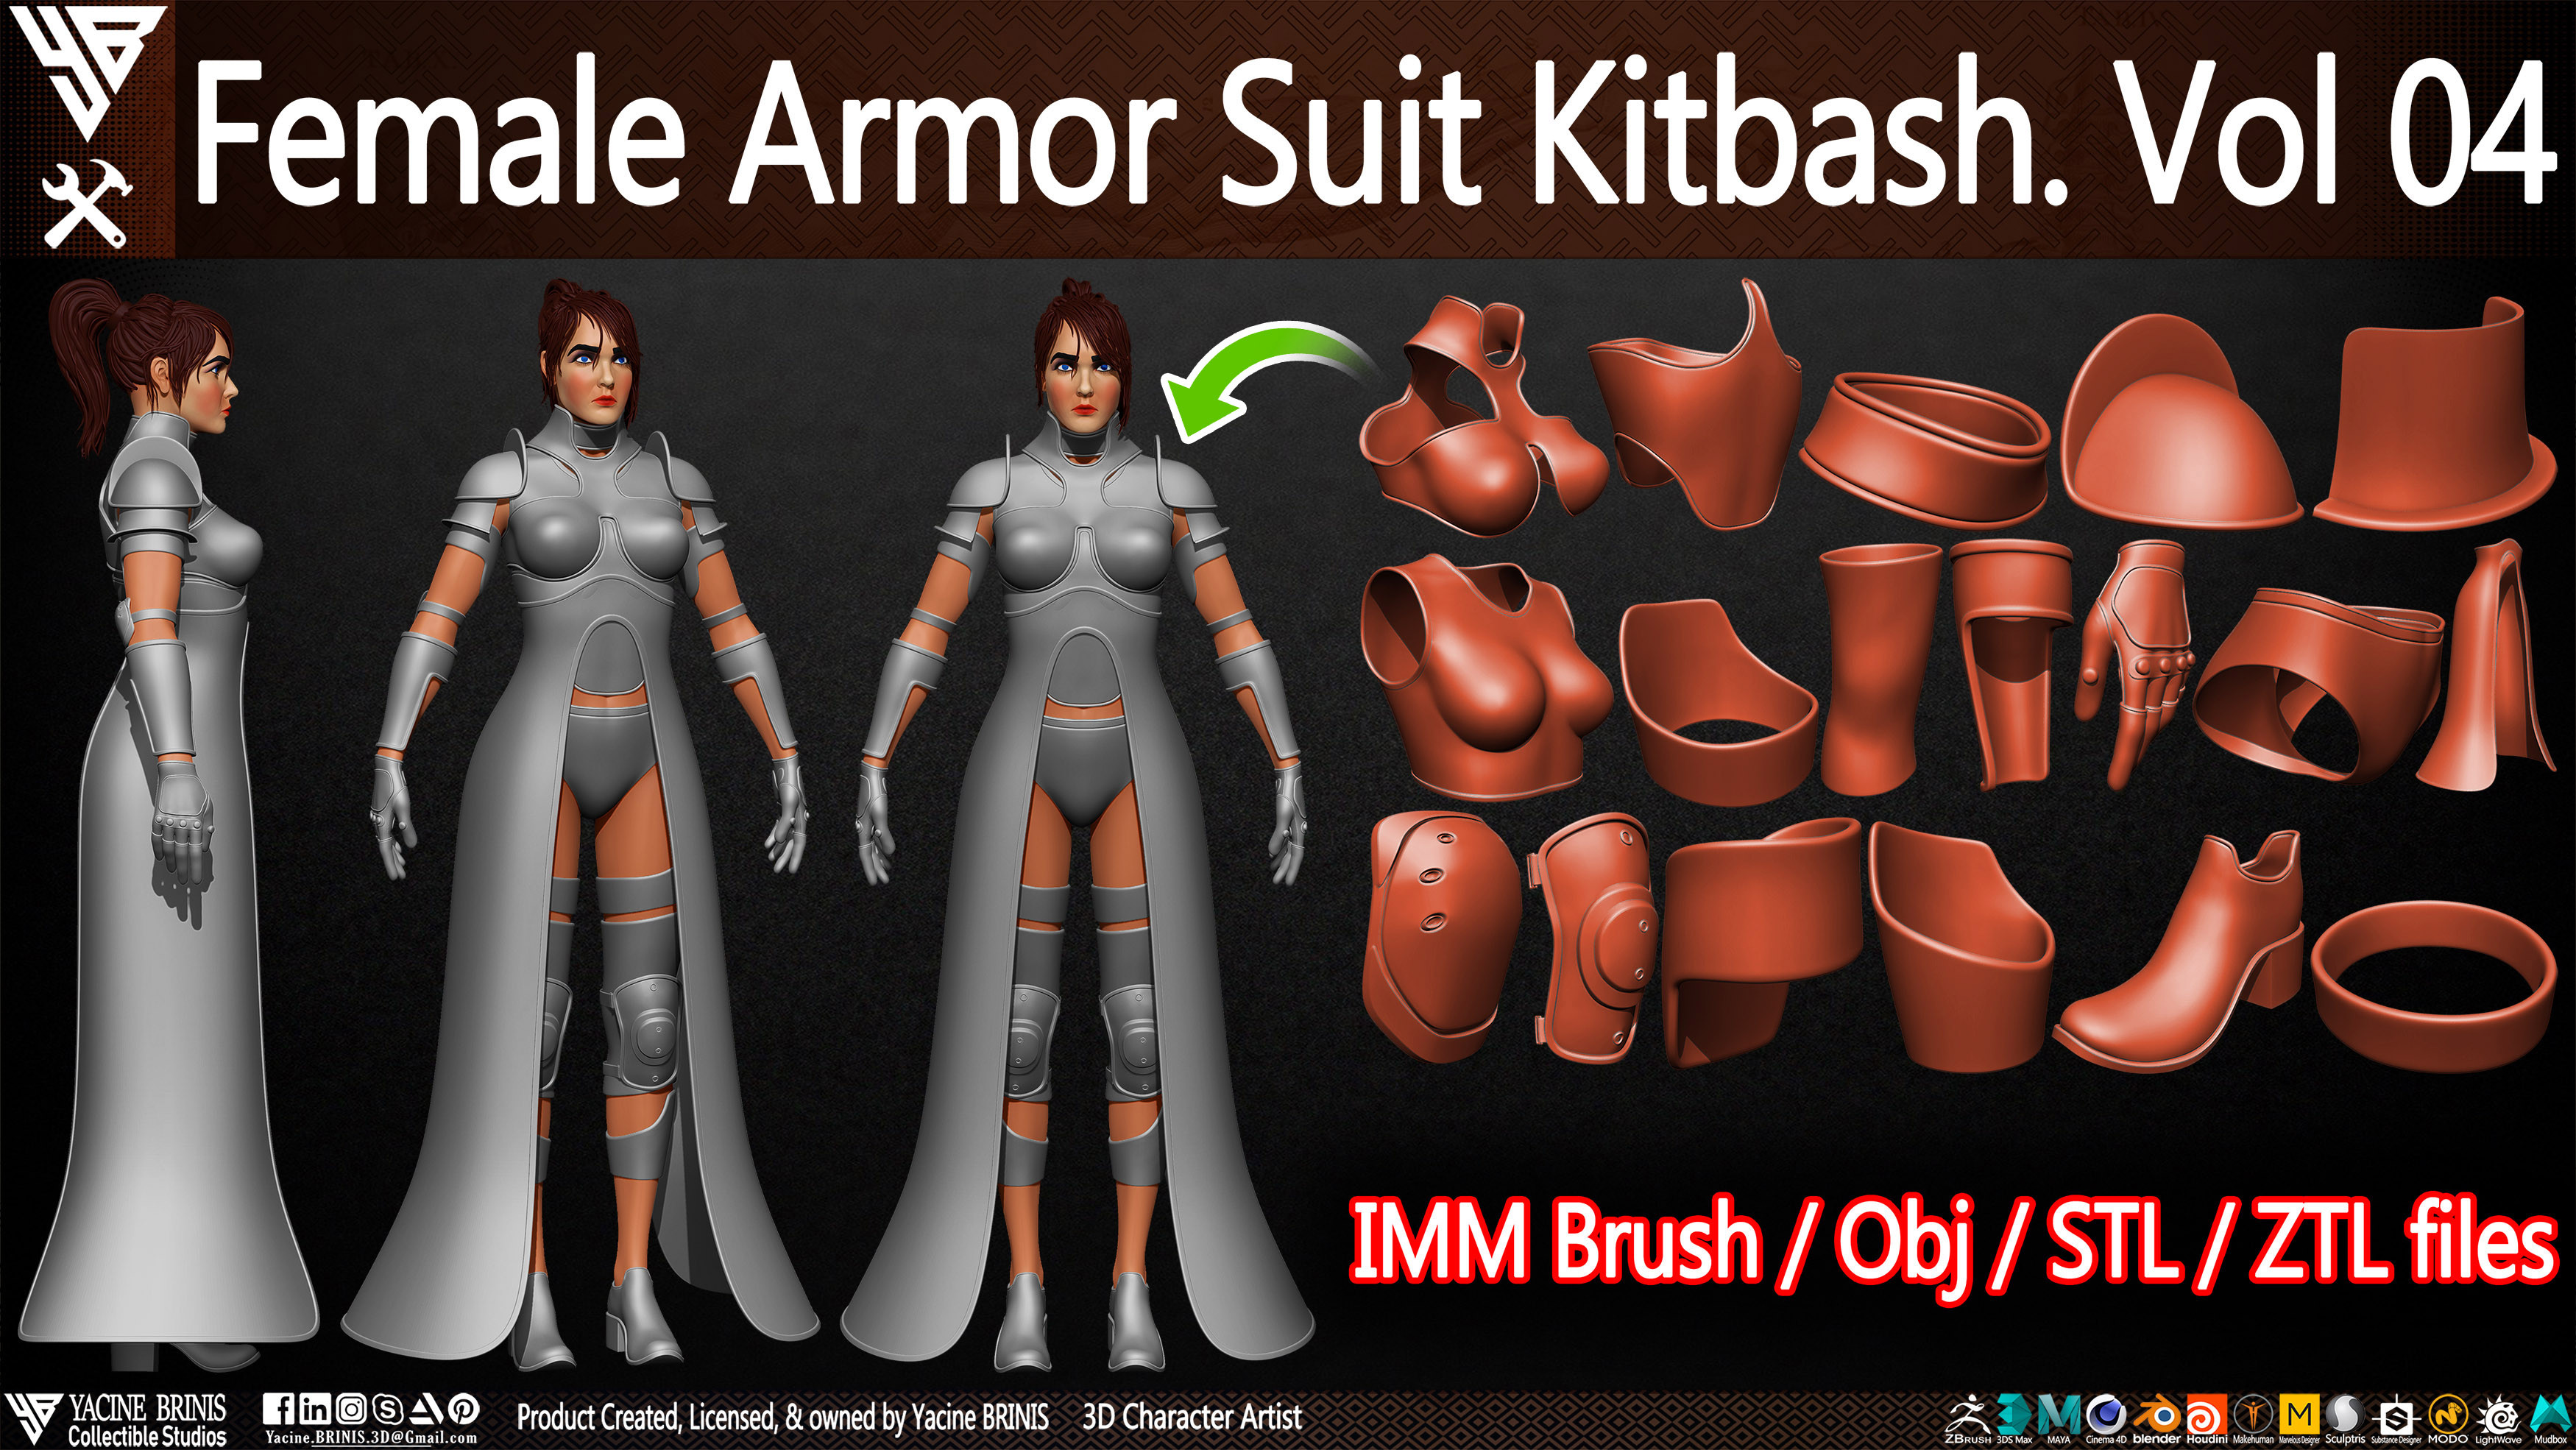 Female Armor Suit Kitbash Vol 04 sculpted By Yacine BRINIS Set 001